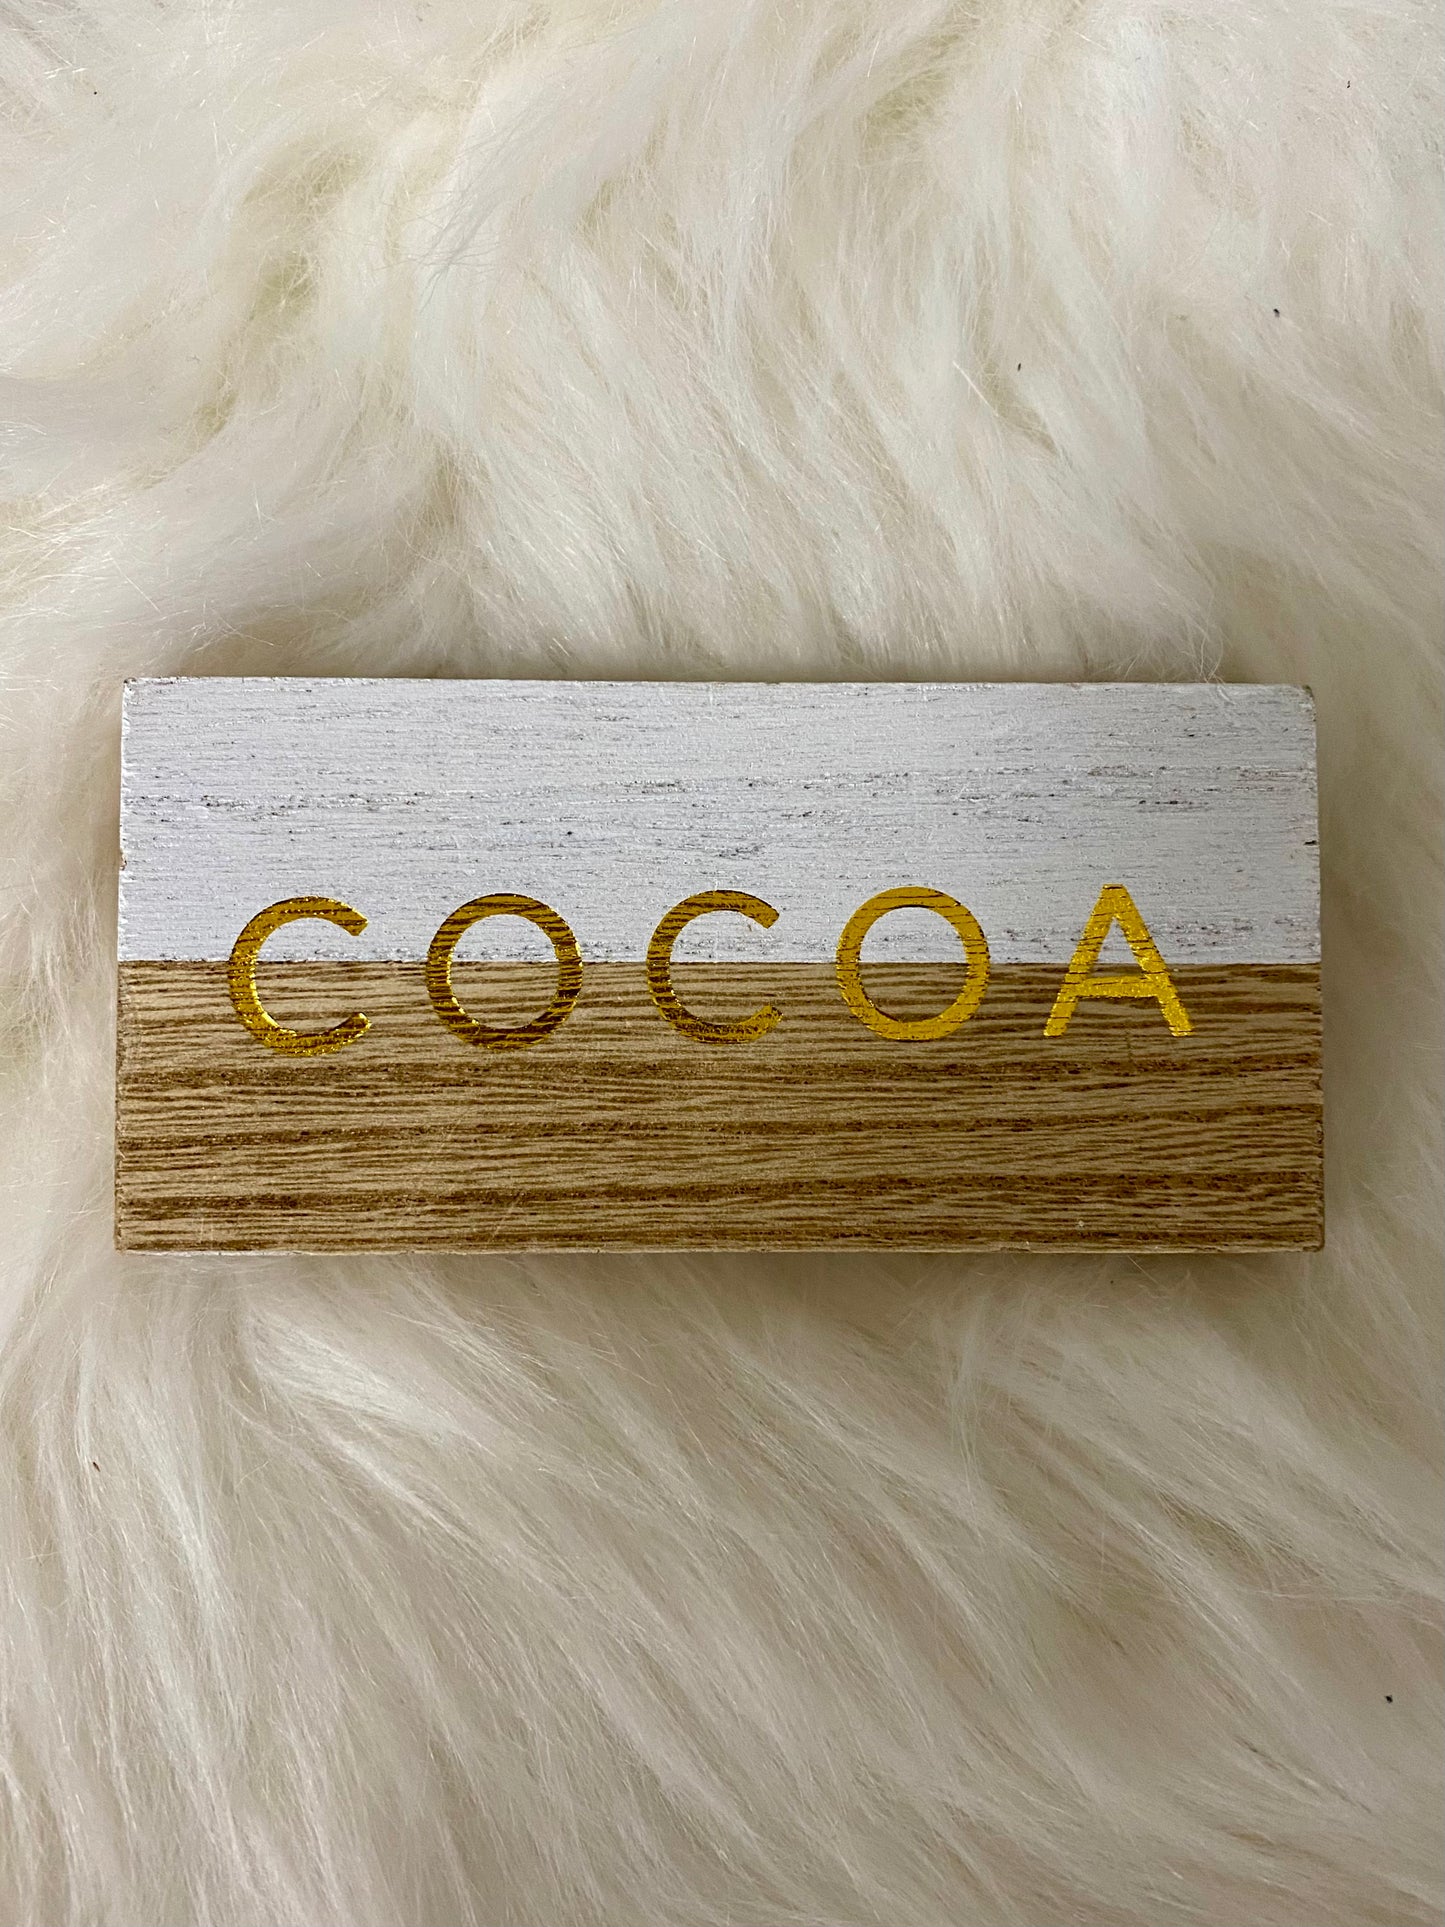 Cocoa Wood Block Shelf Sitter